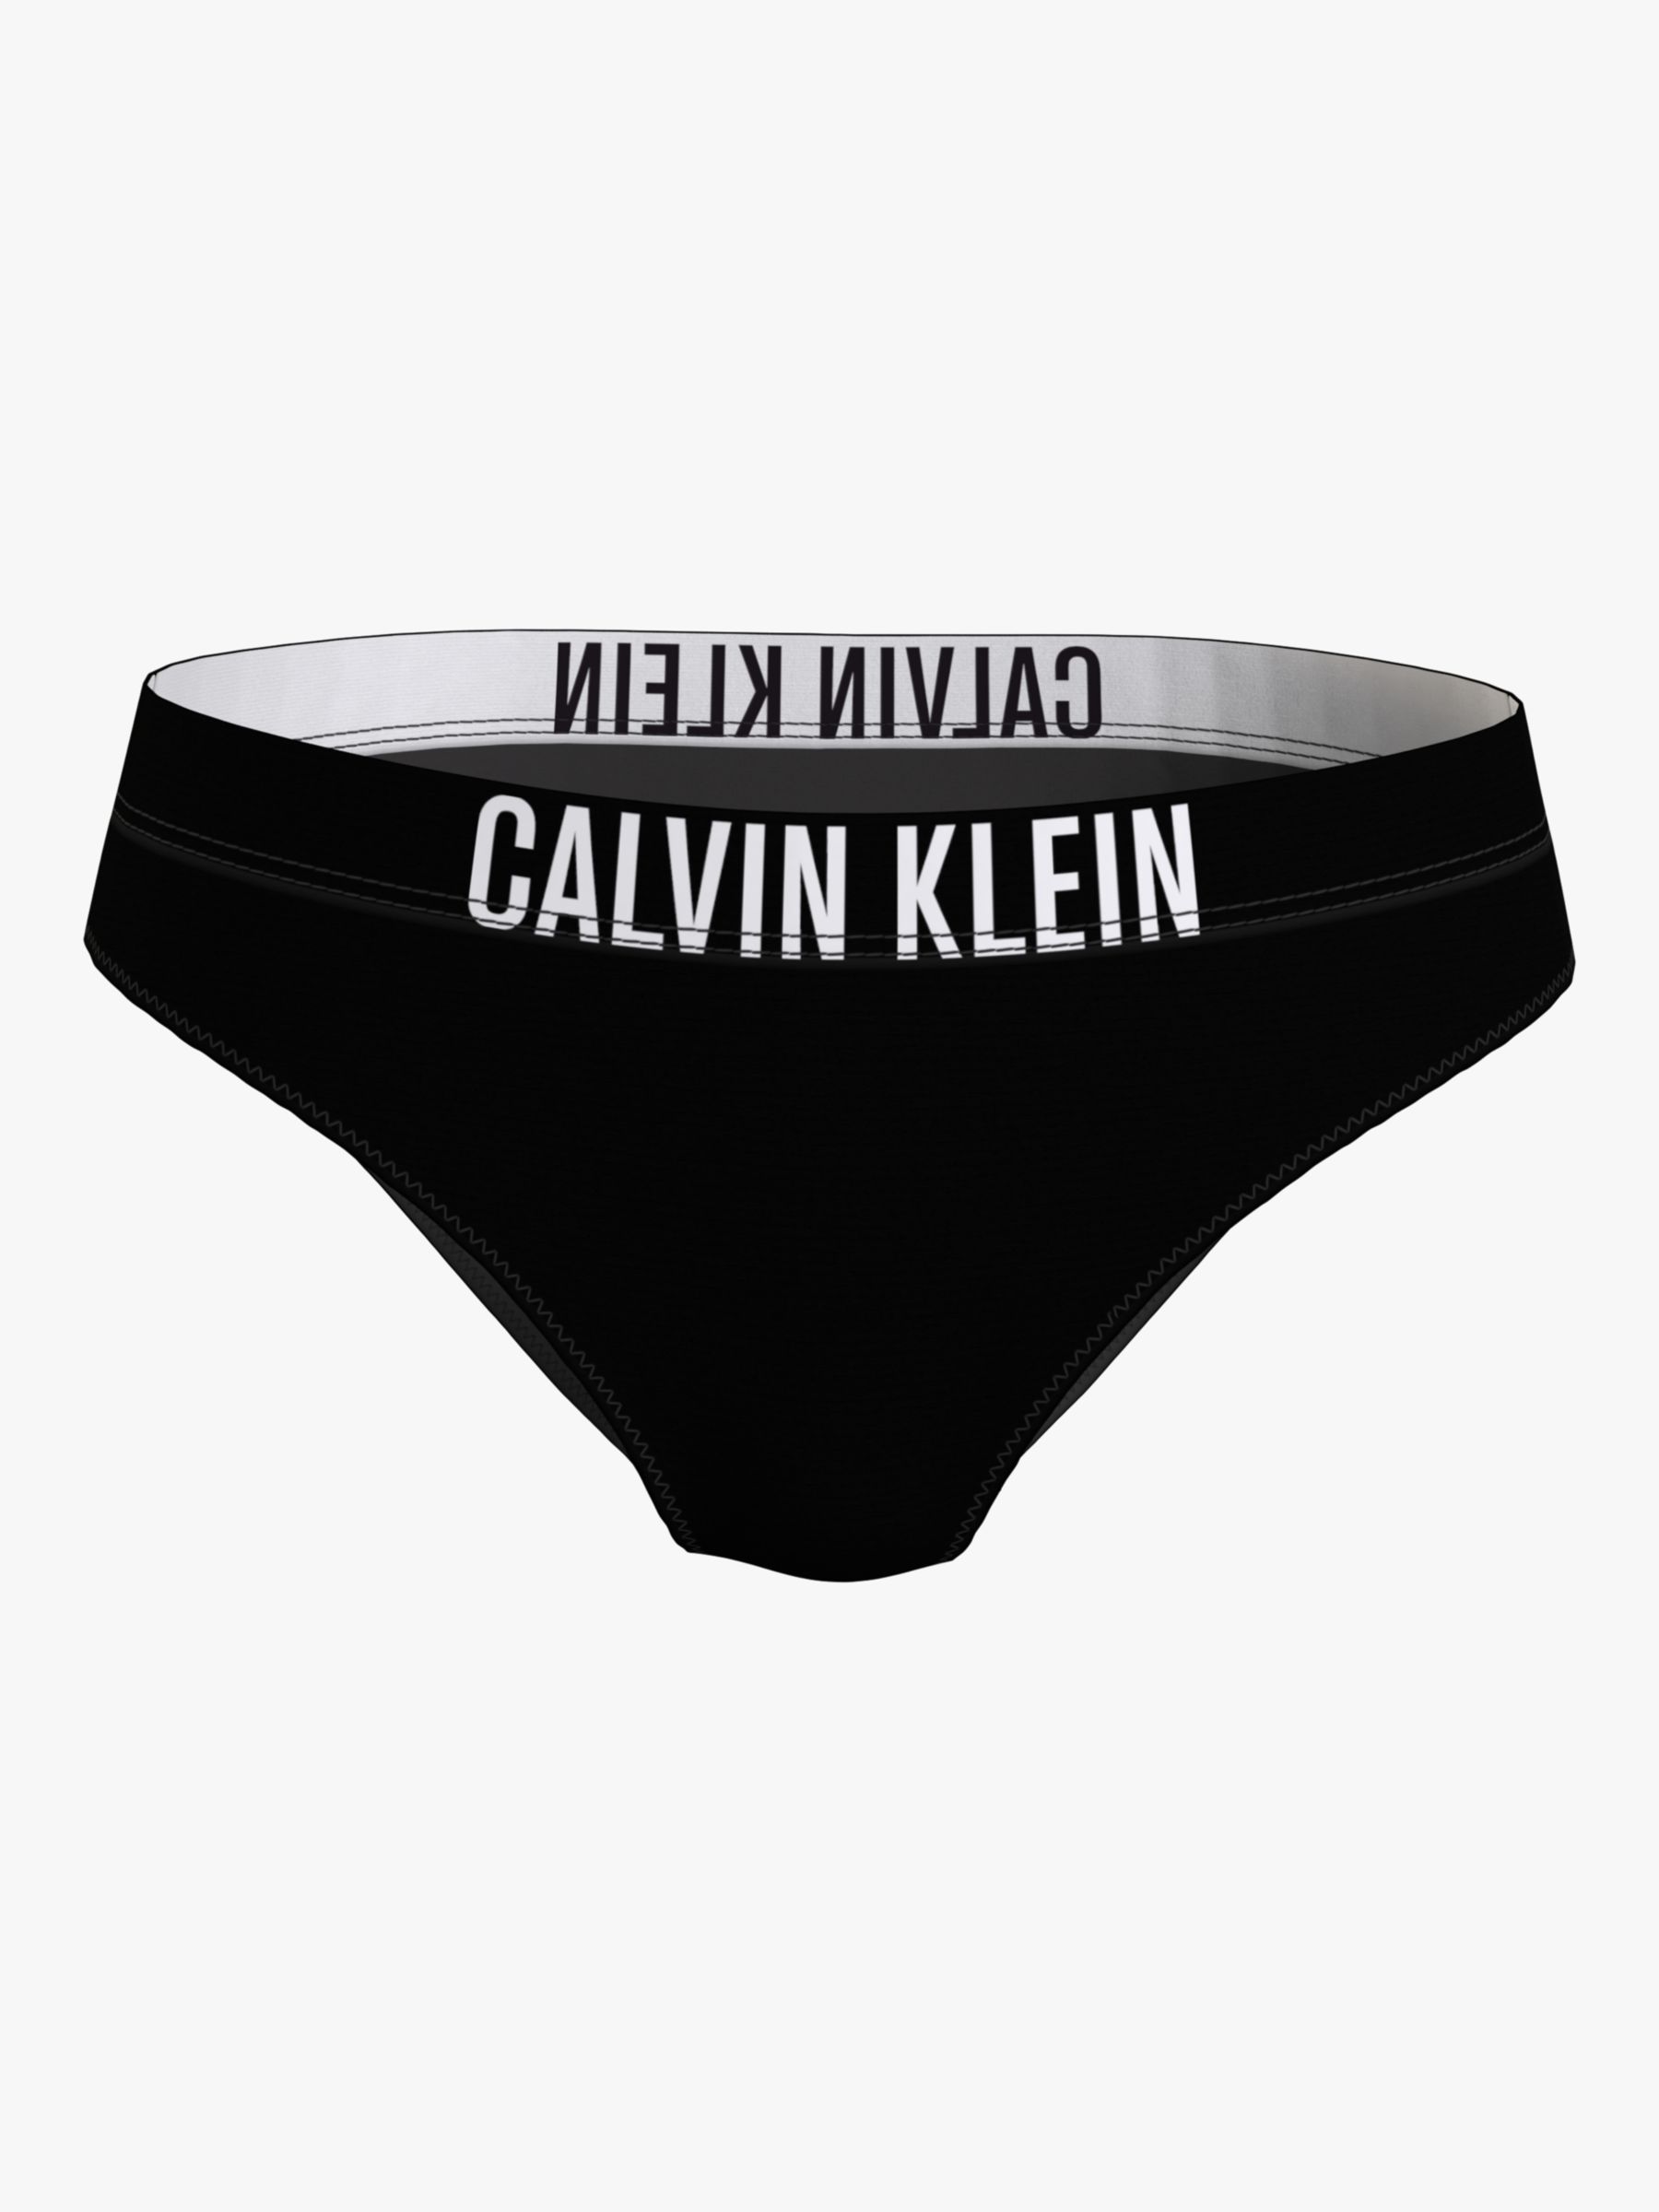 Calvin Klein intense power ribbed classic bikini bottom in bright pink